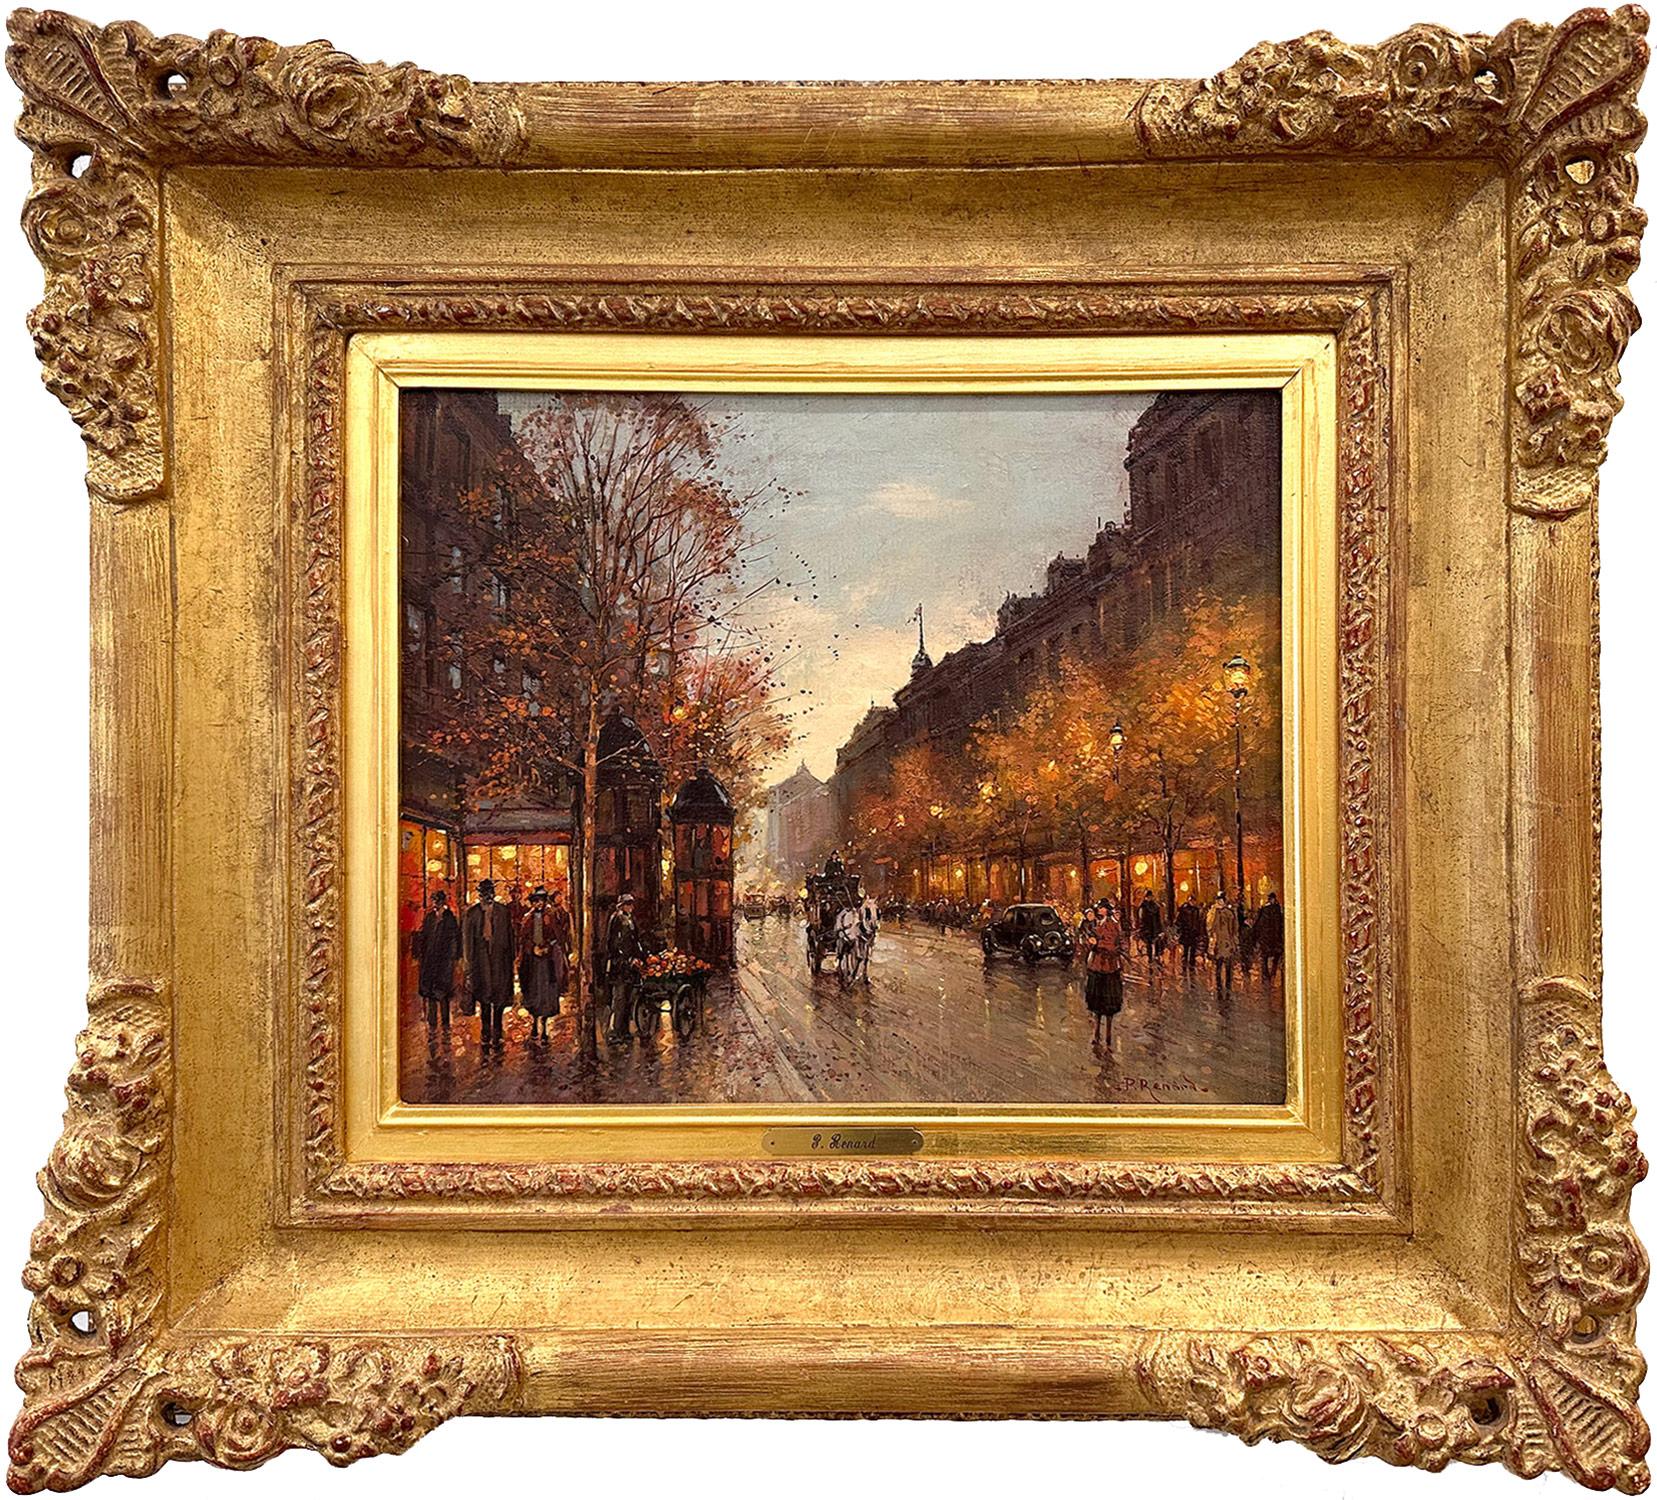 Paul Renard Landscape Painting - "Roses in the Cart" Parisian Autumn Street Scene Oil Painting on Canvas Framed